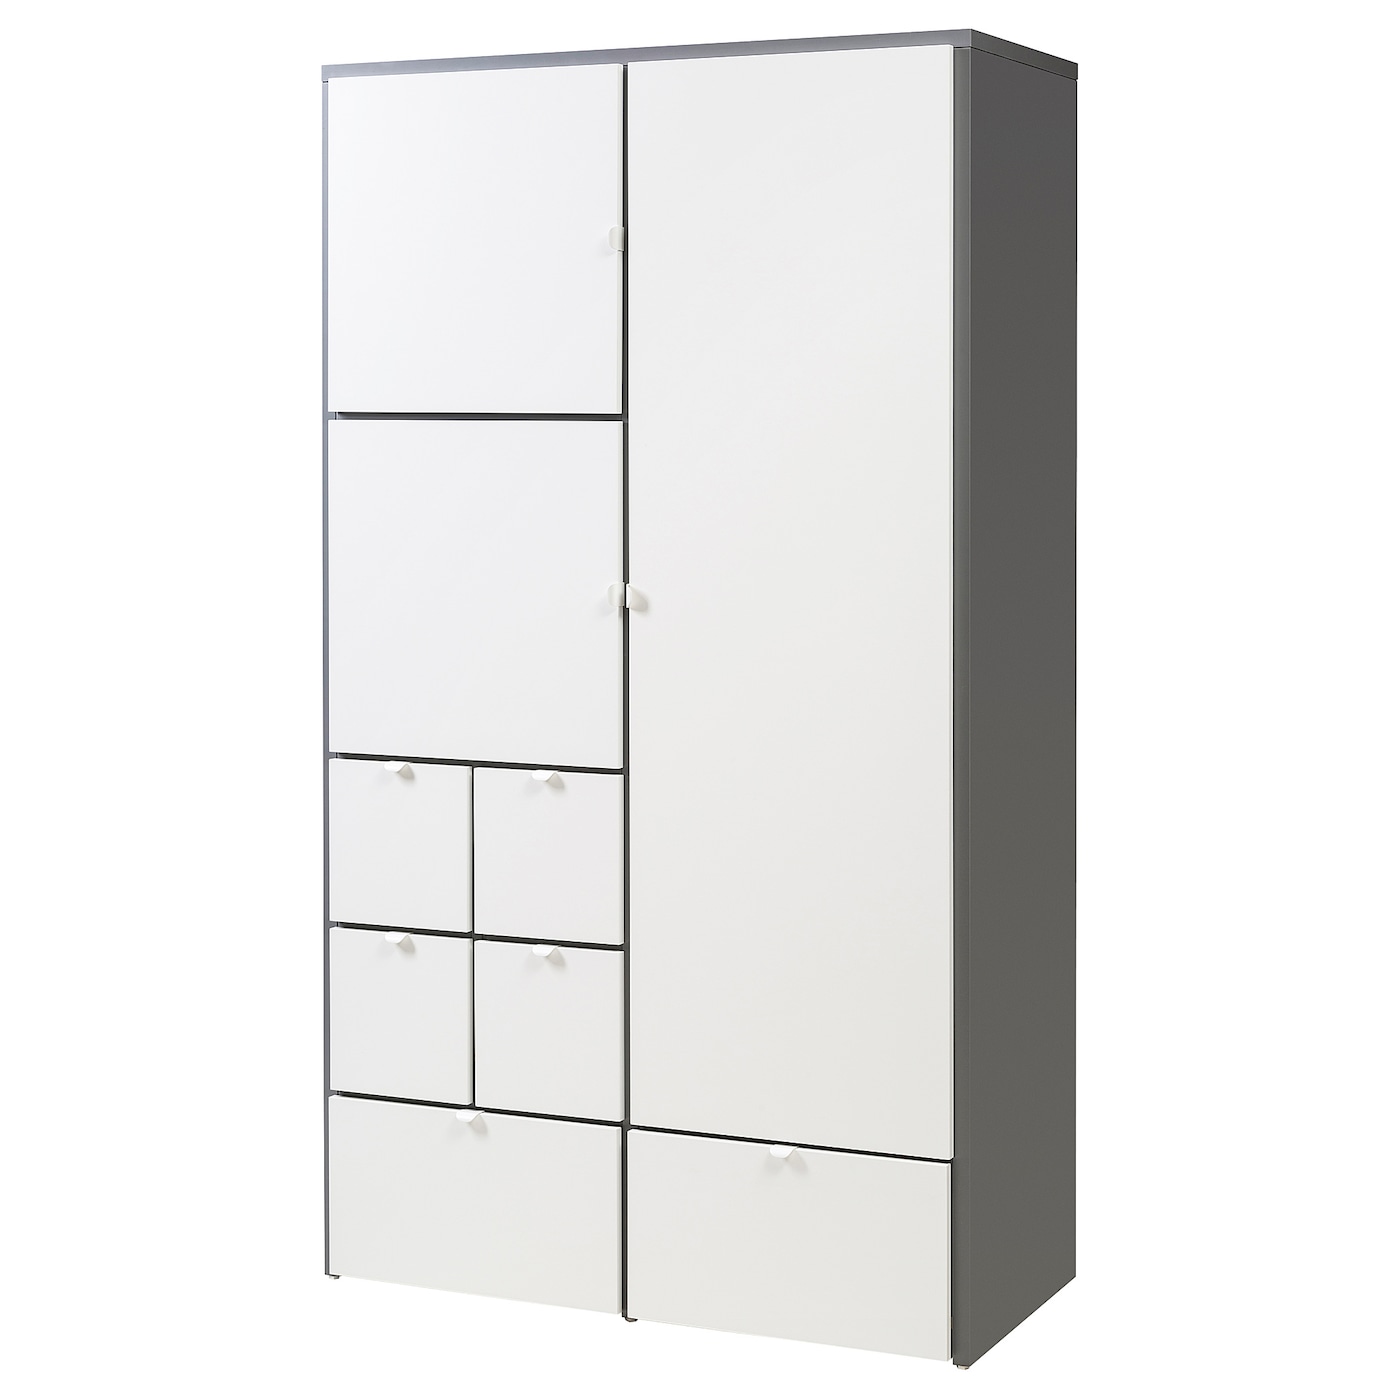 Платяной шкаф  - VIHALS IKEA/ ВИХАЛС ИКЕА, 122x59x216 см, белый